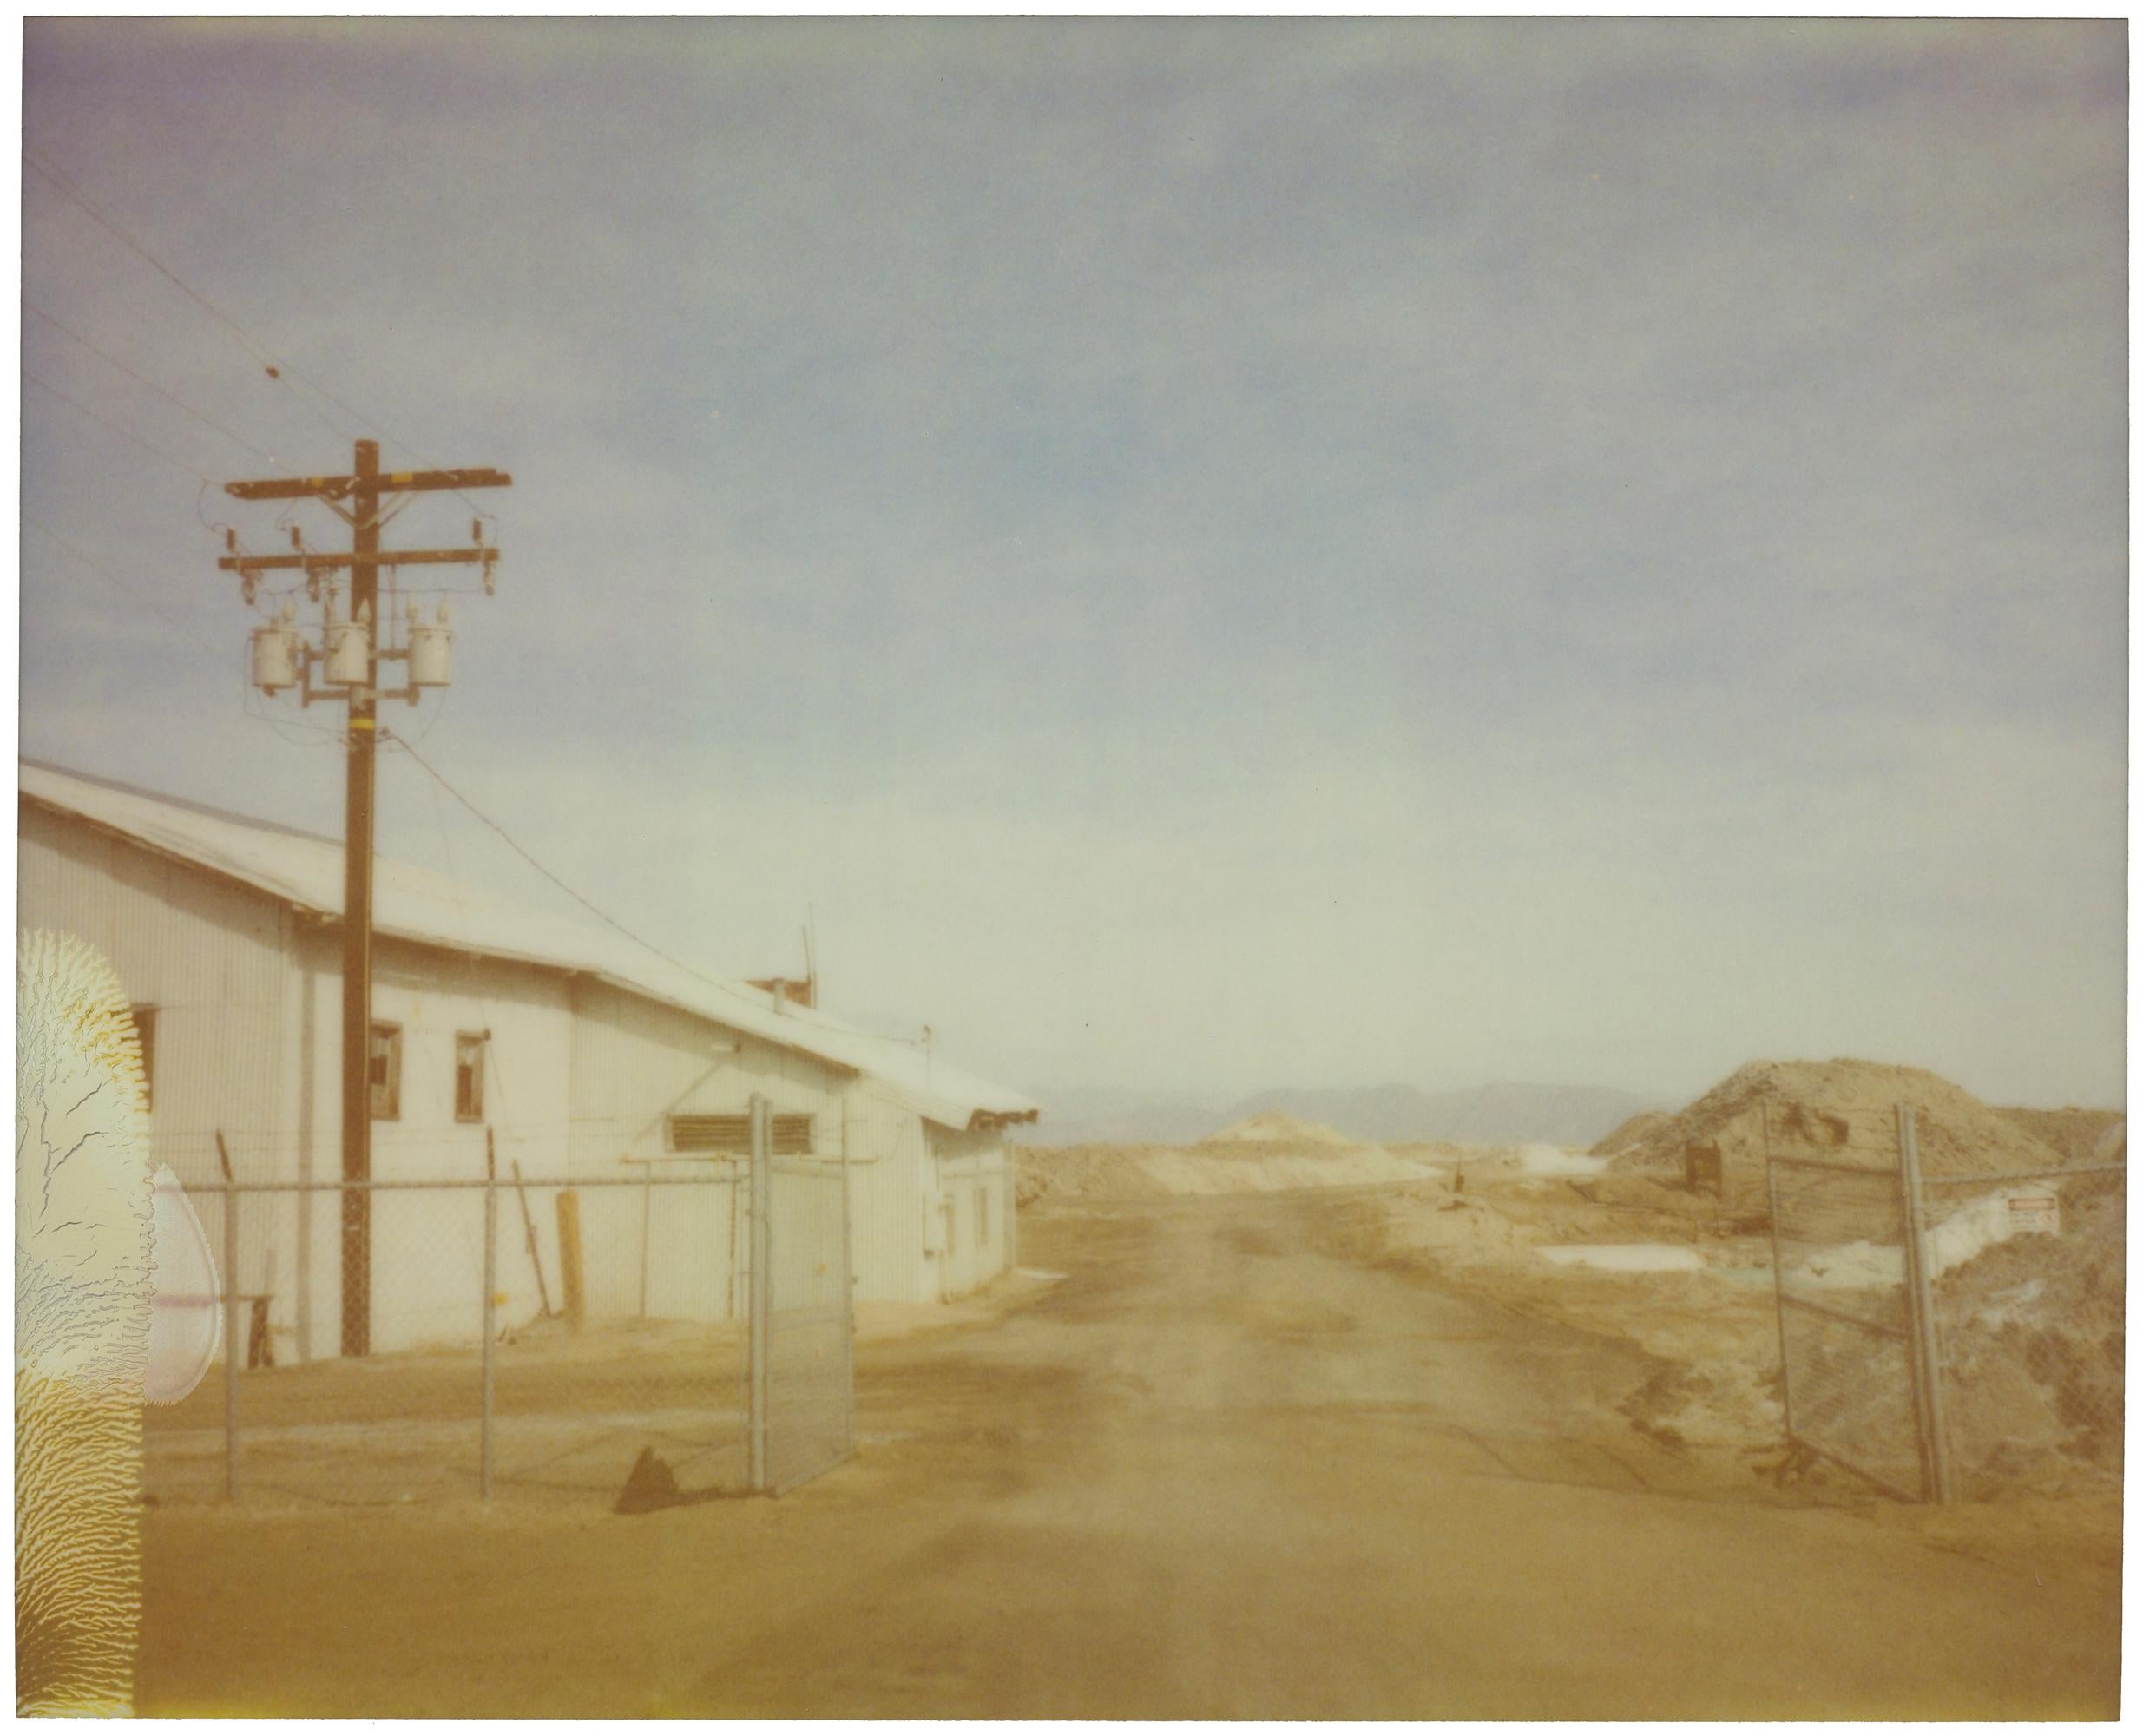 Stefanie Schneider Color Photograph - California Depression (California Badlands) - Contemporary, Polaroid, Landscape